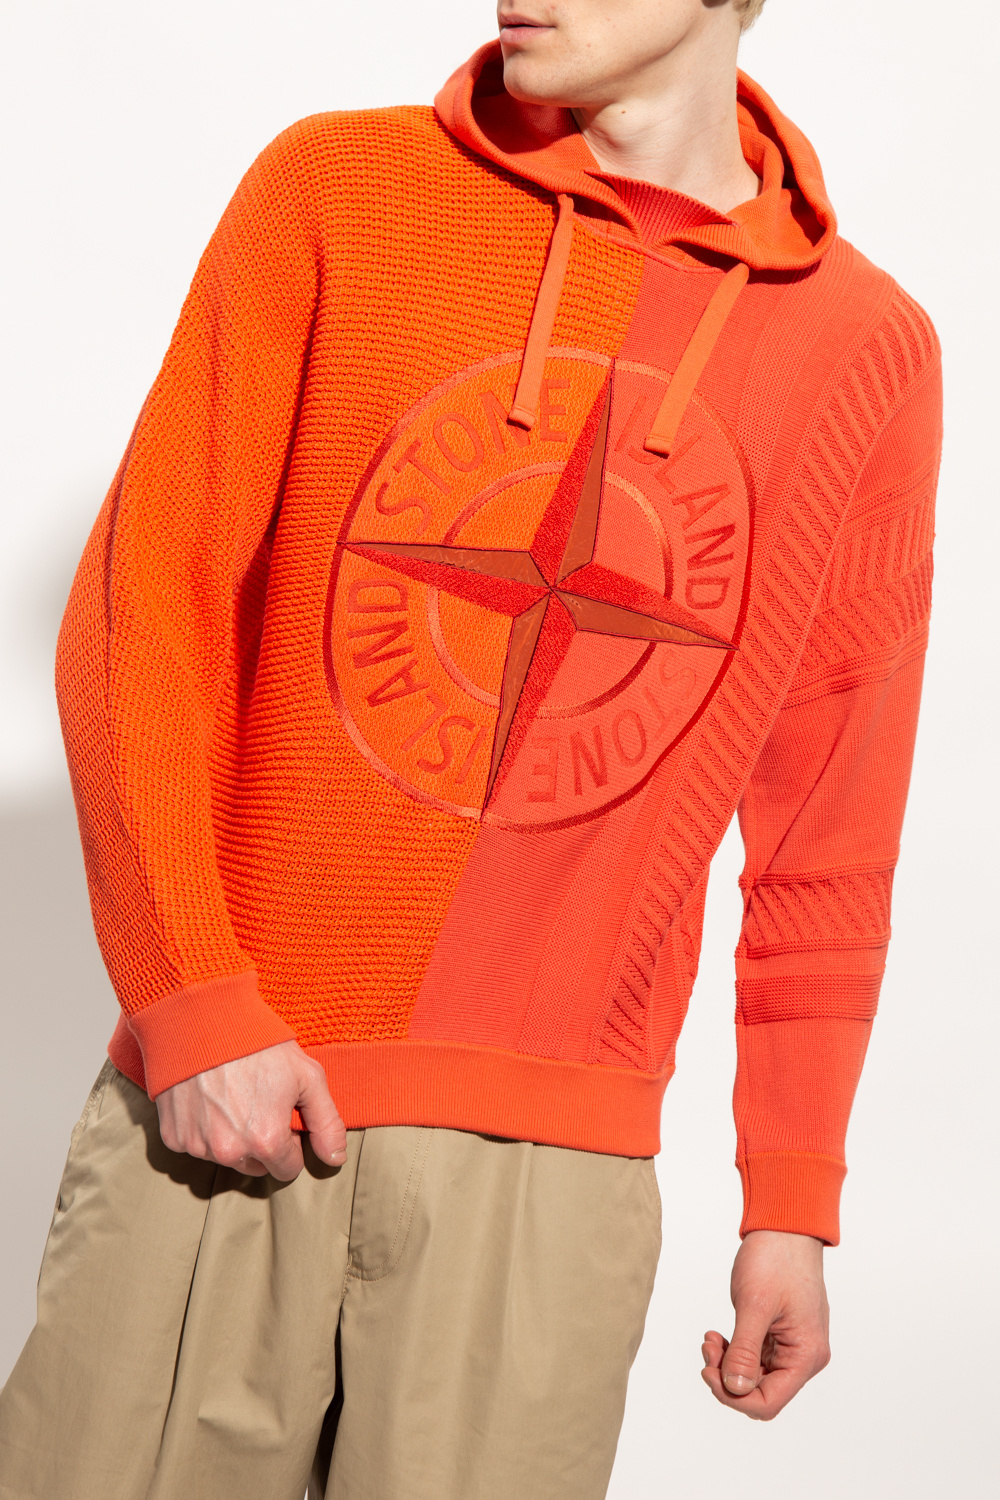 - IetpShops Island Rosa print hoodie Jersey shirt White - Stone striped cotton Orange AIDES